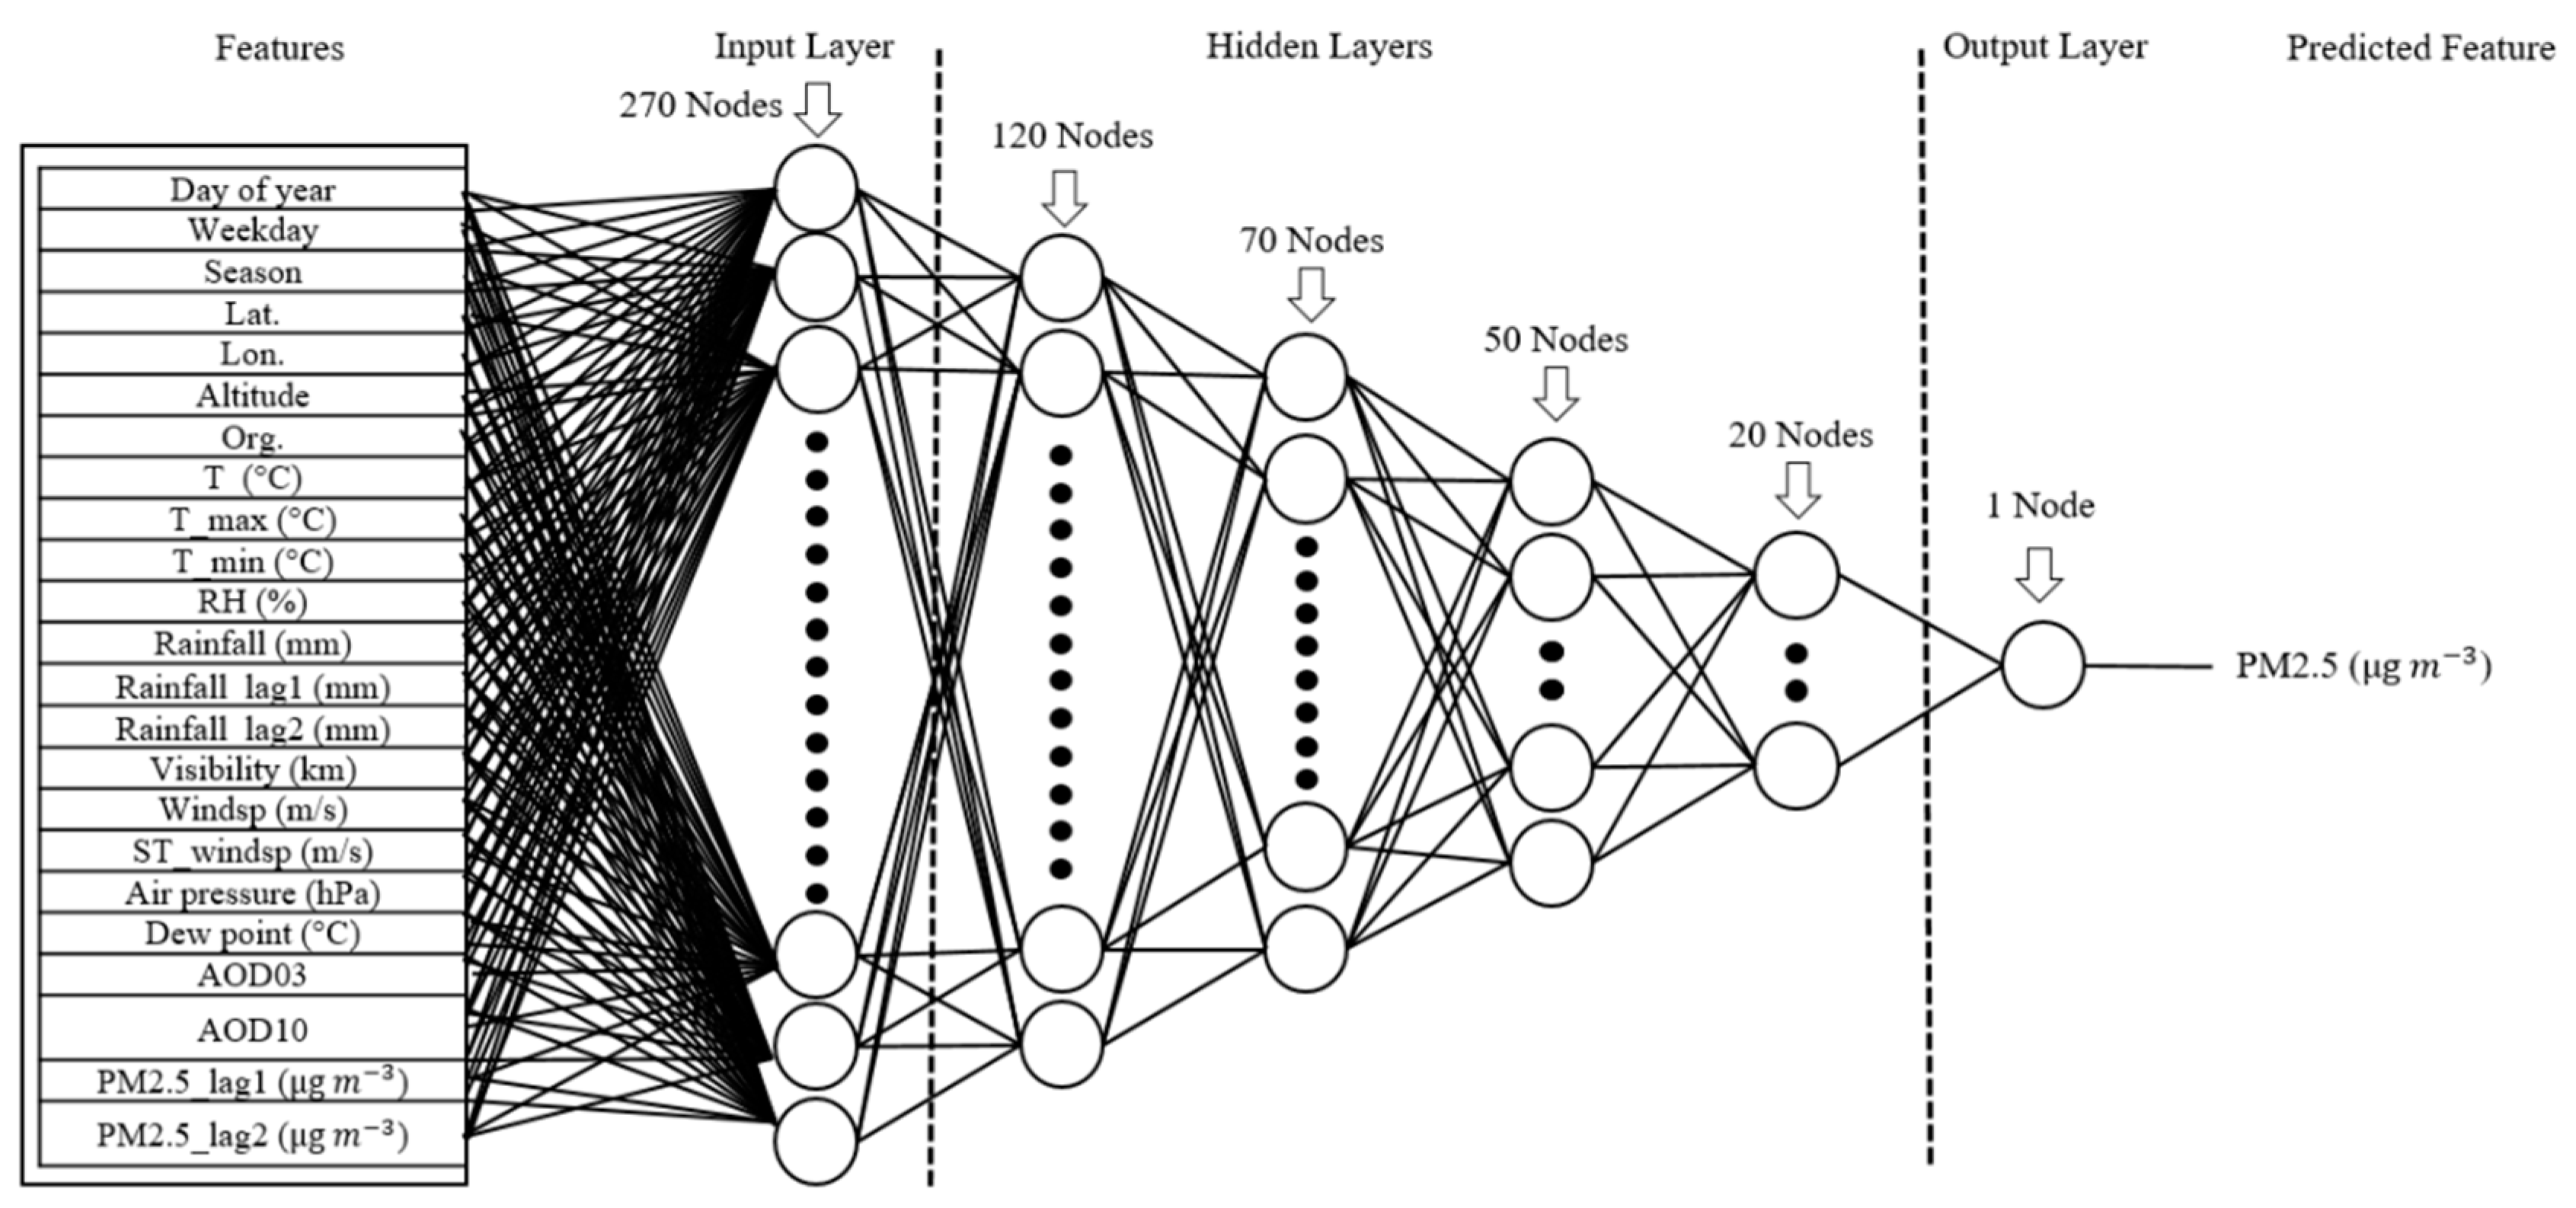 darknet neural network hudra